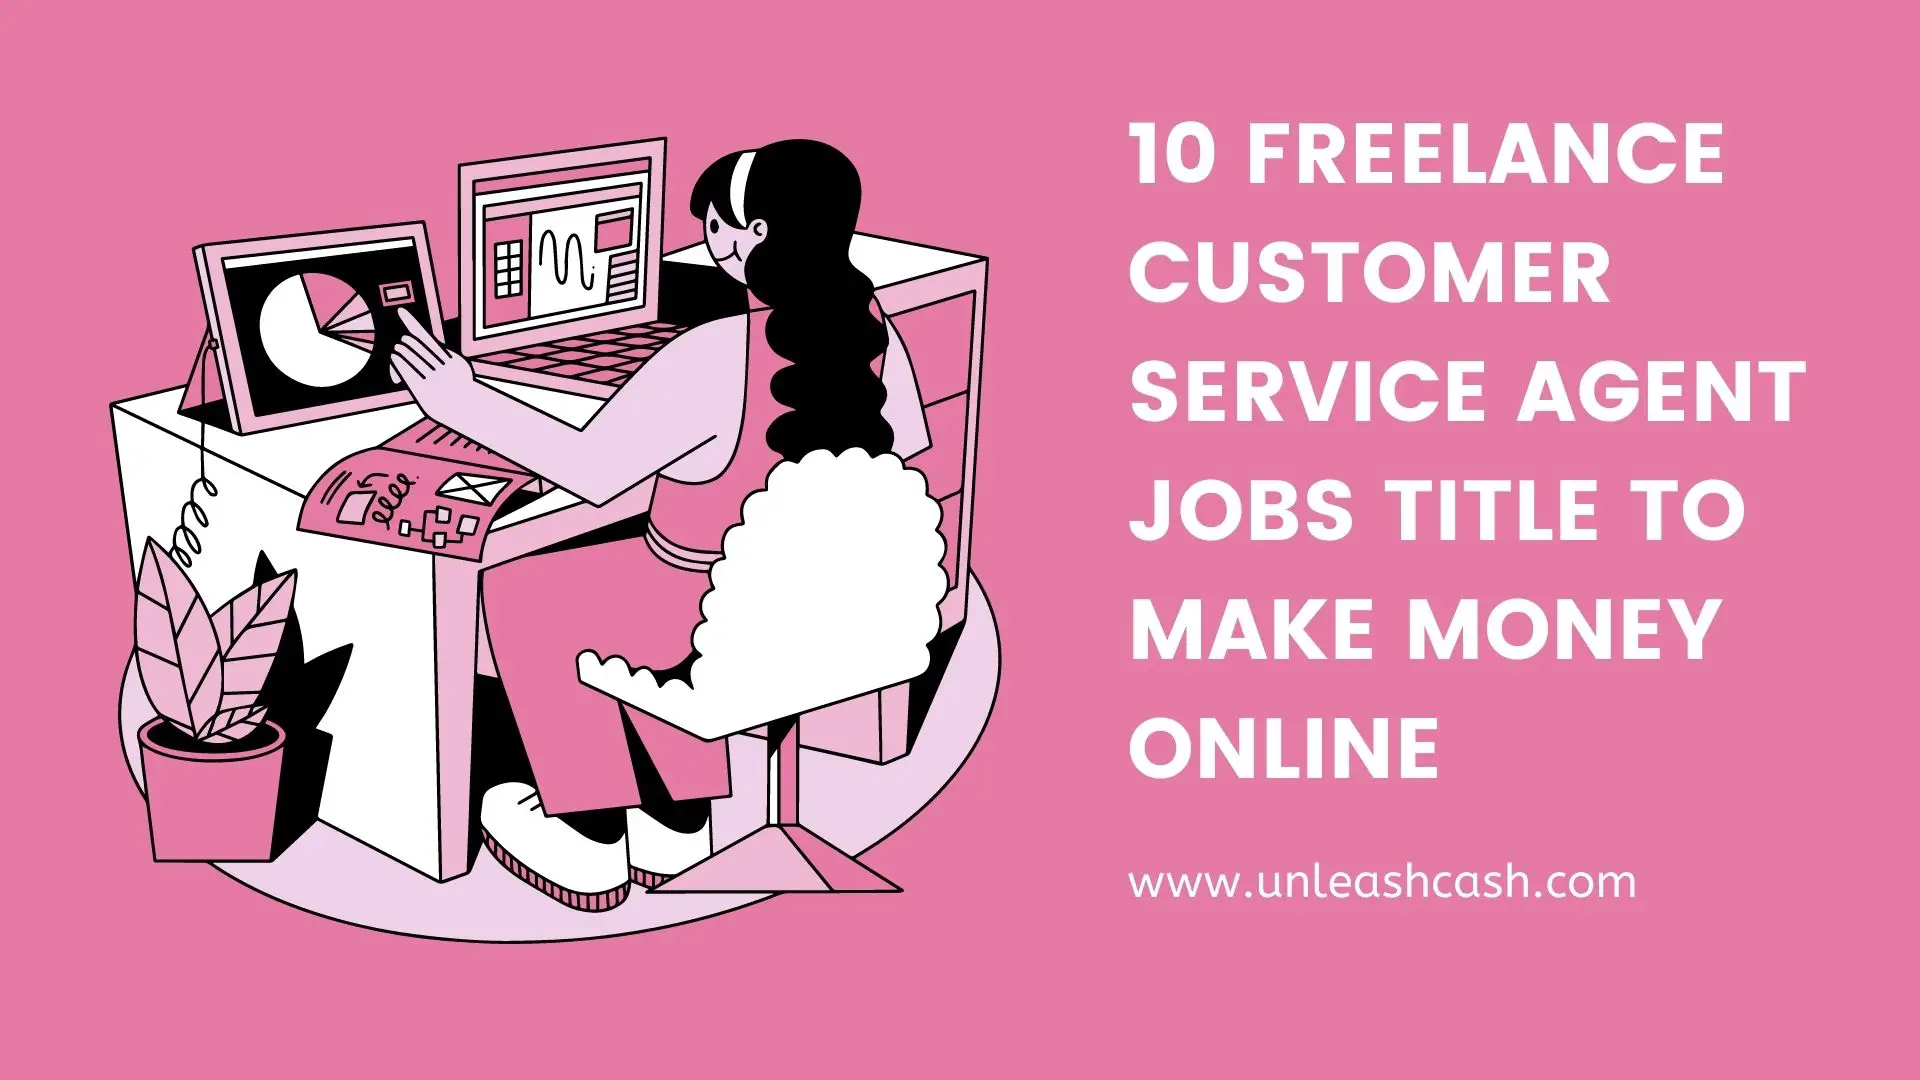 10 Freelance Customer Service Agent Jobs Title To Make Money Online